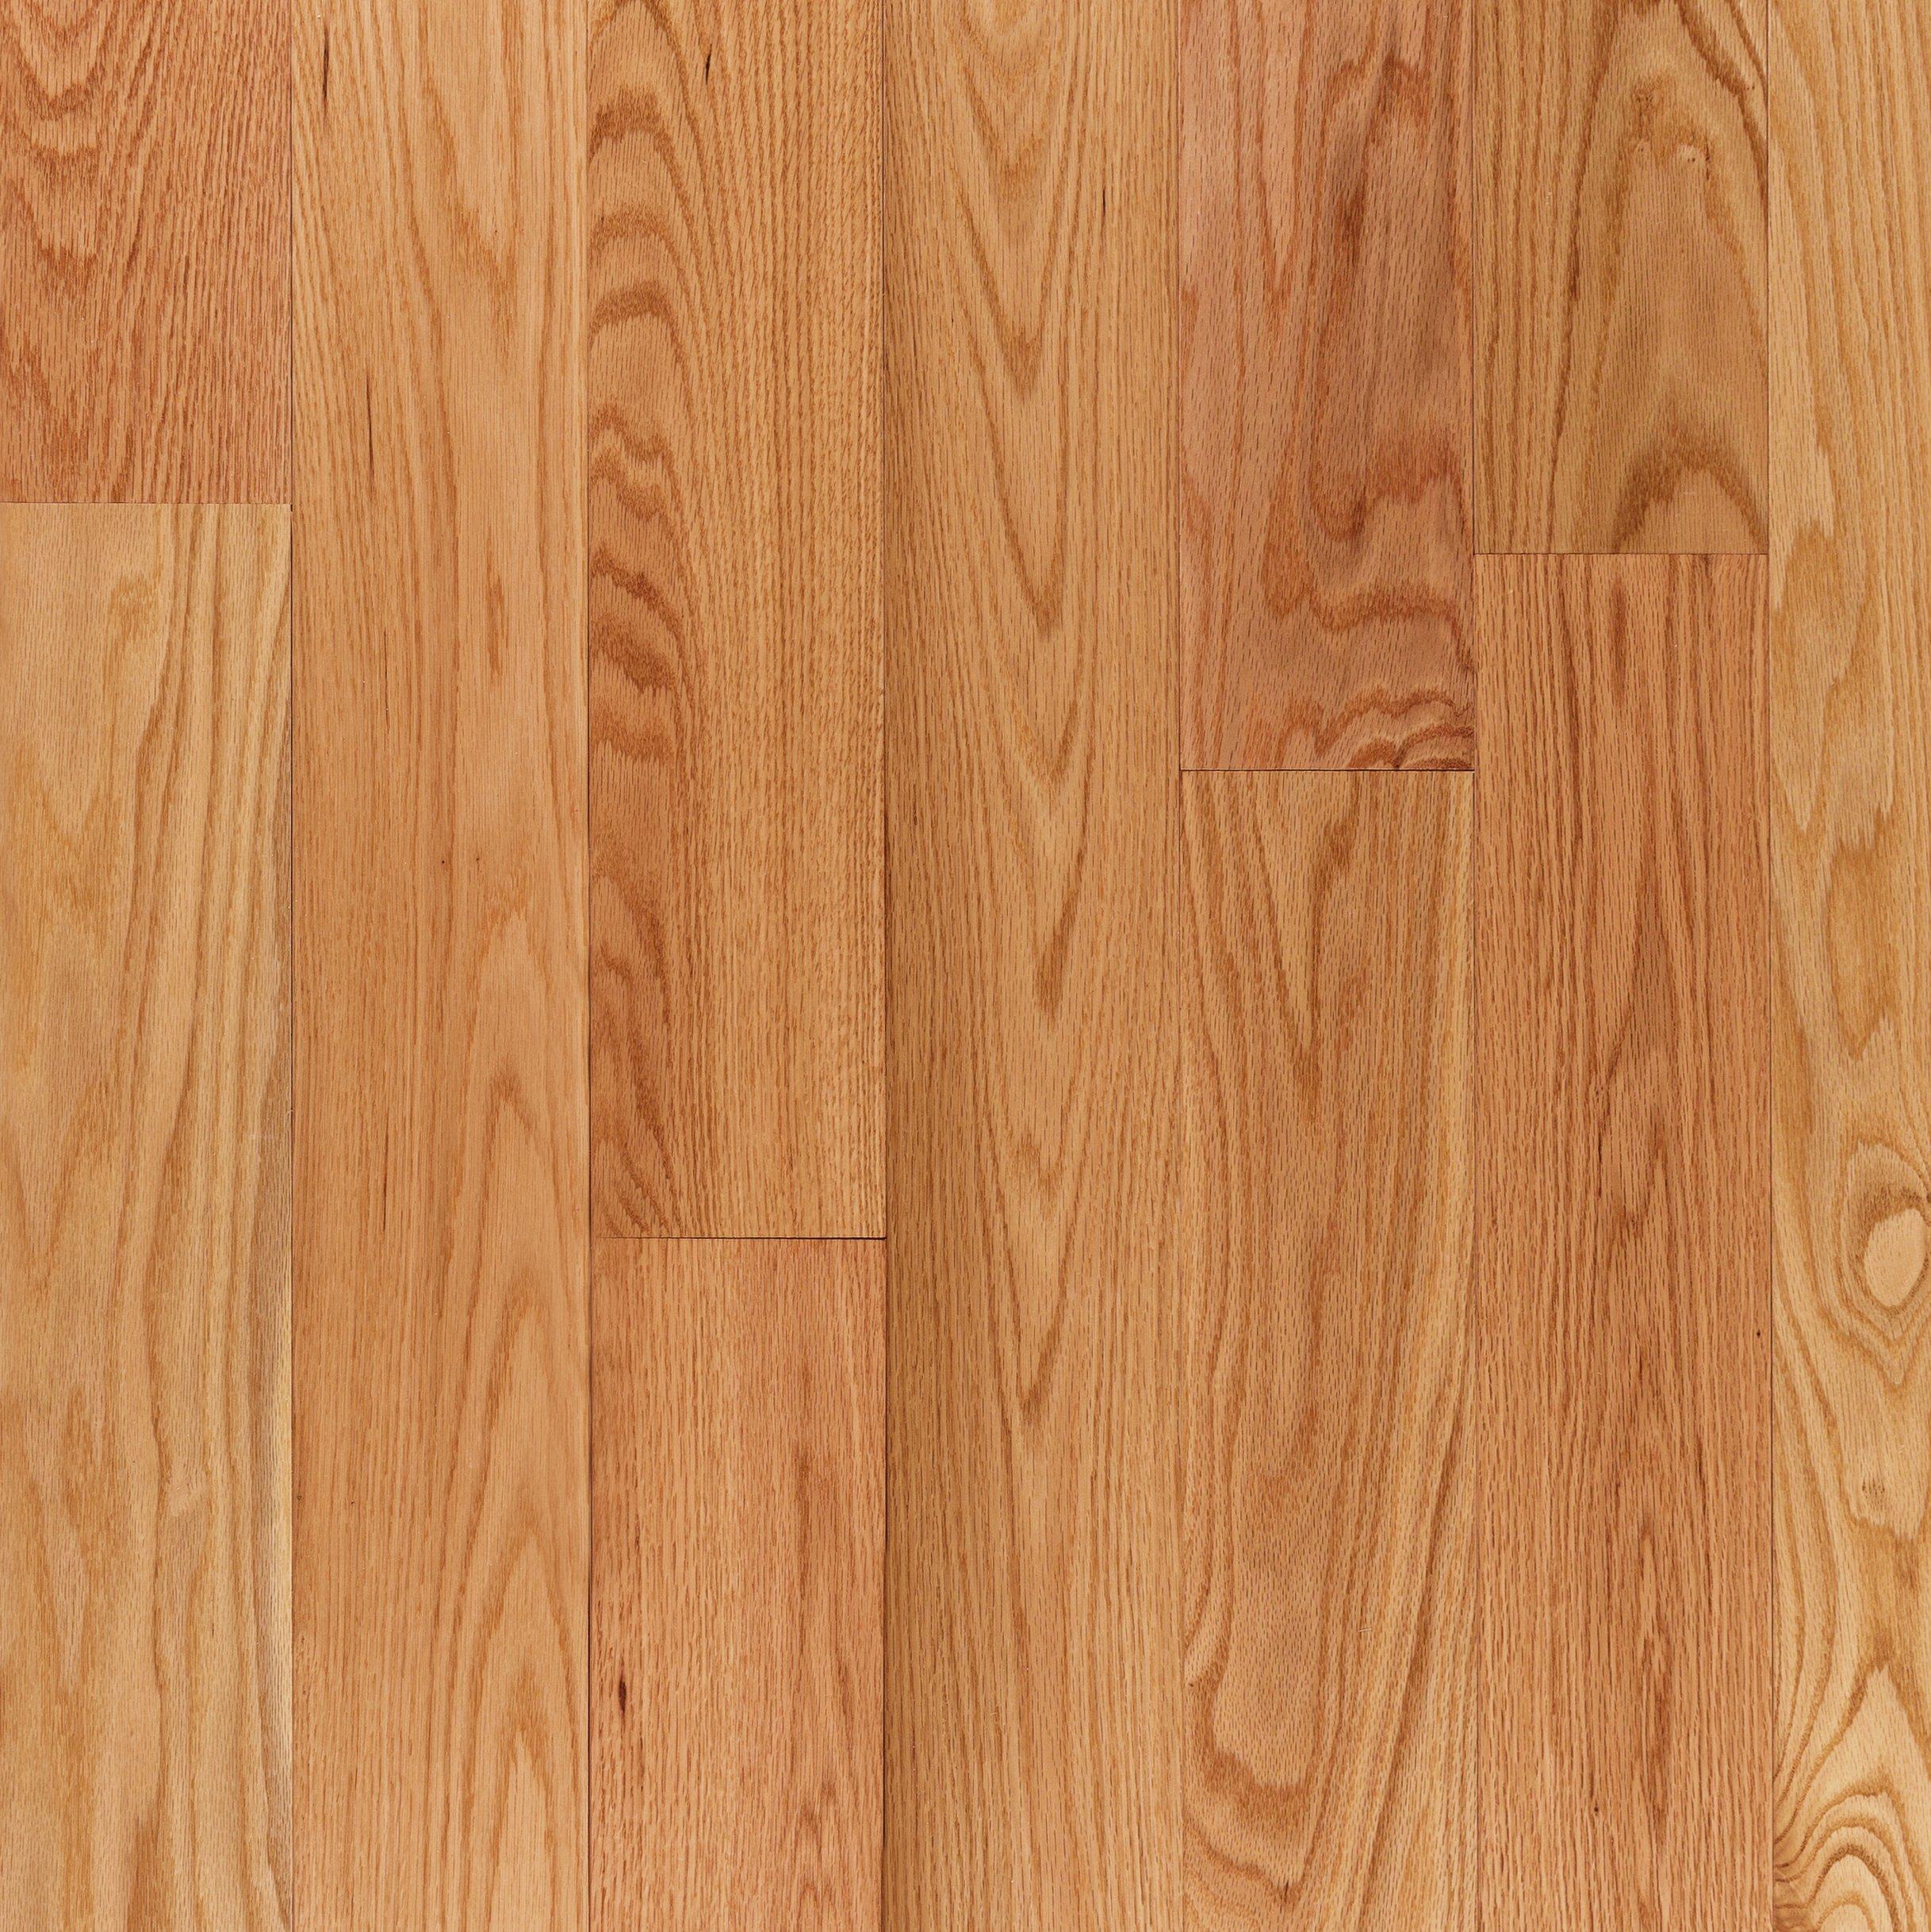 Red Oak Smooth Solid Hardwood Floor, 1 1 4 Hardwood Flooring